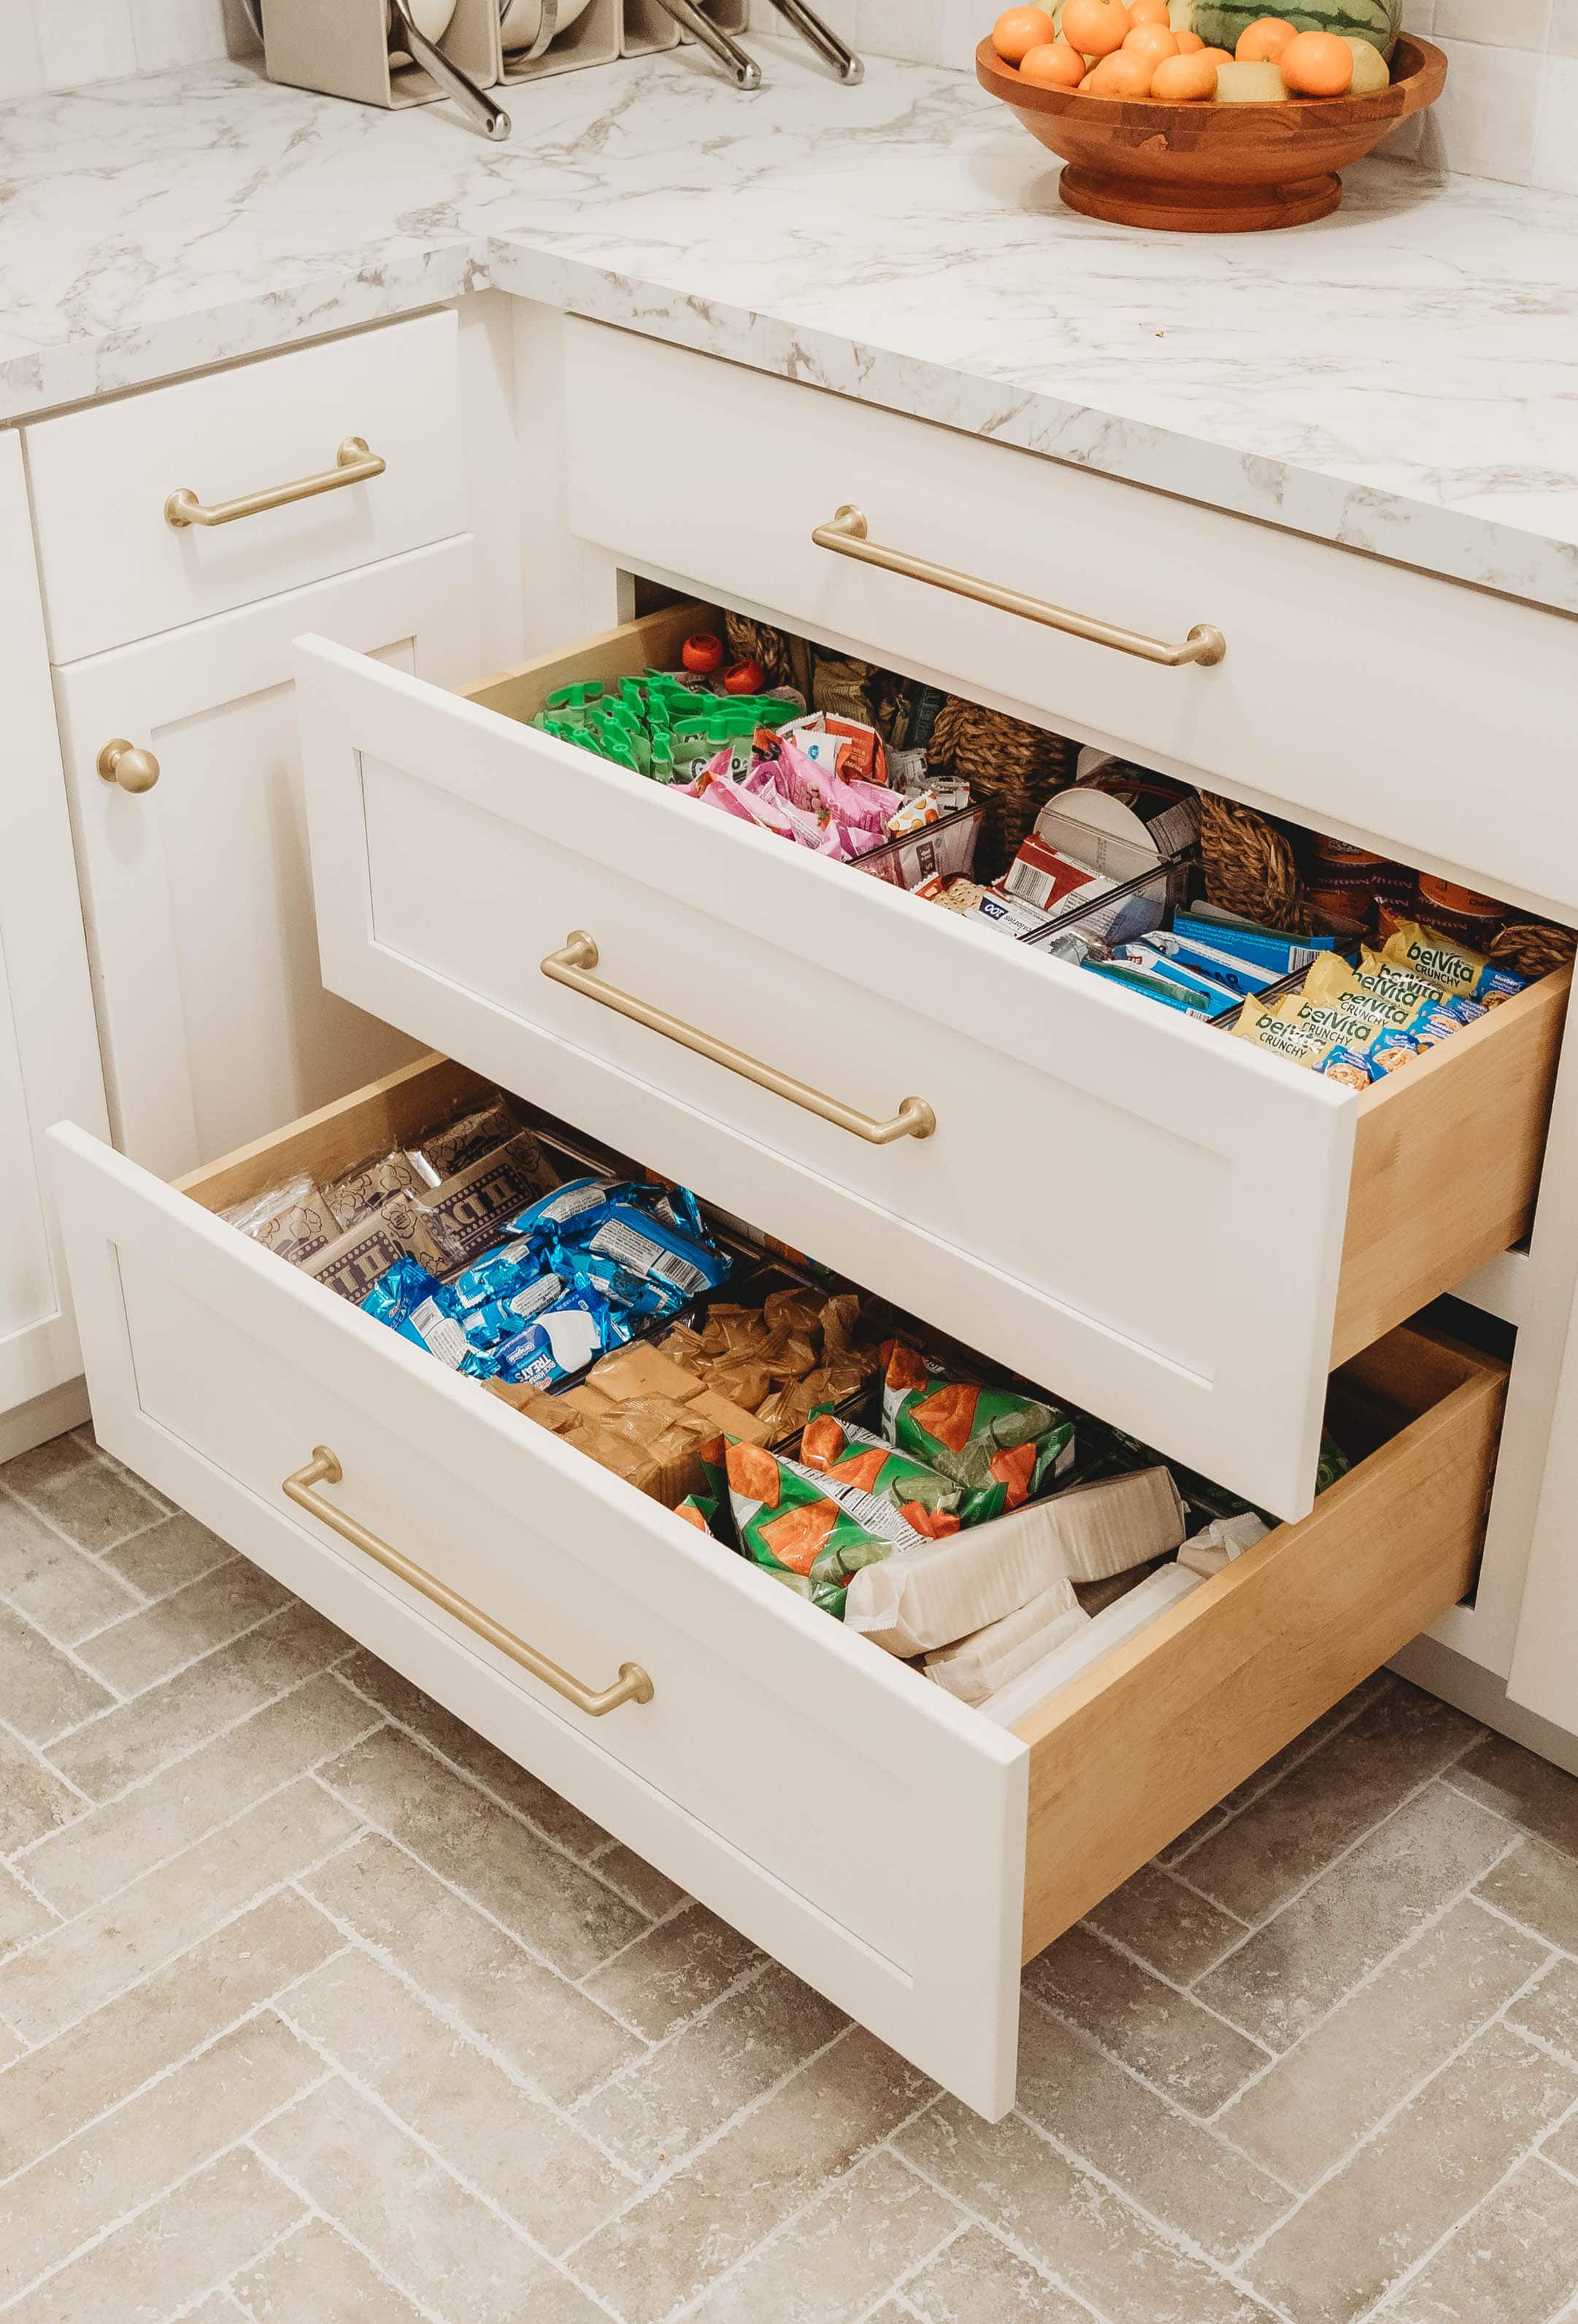 Pantry drawers full of snacks